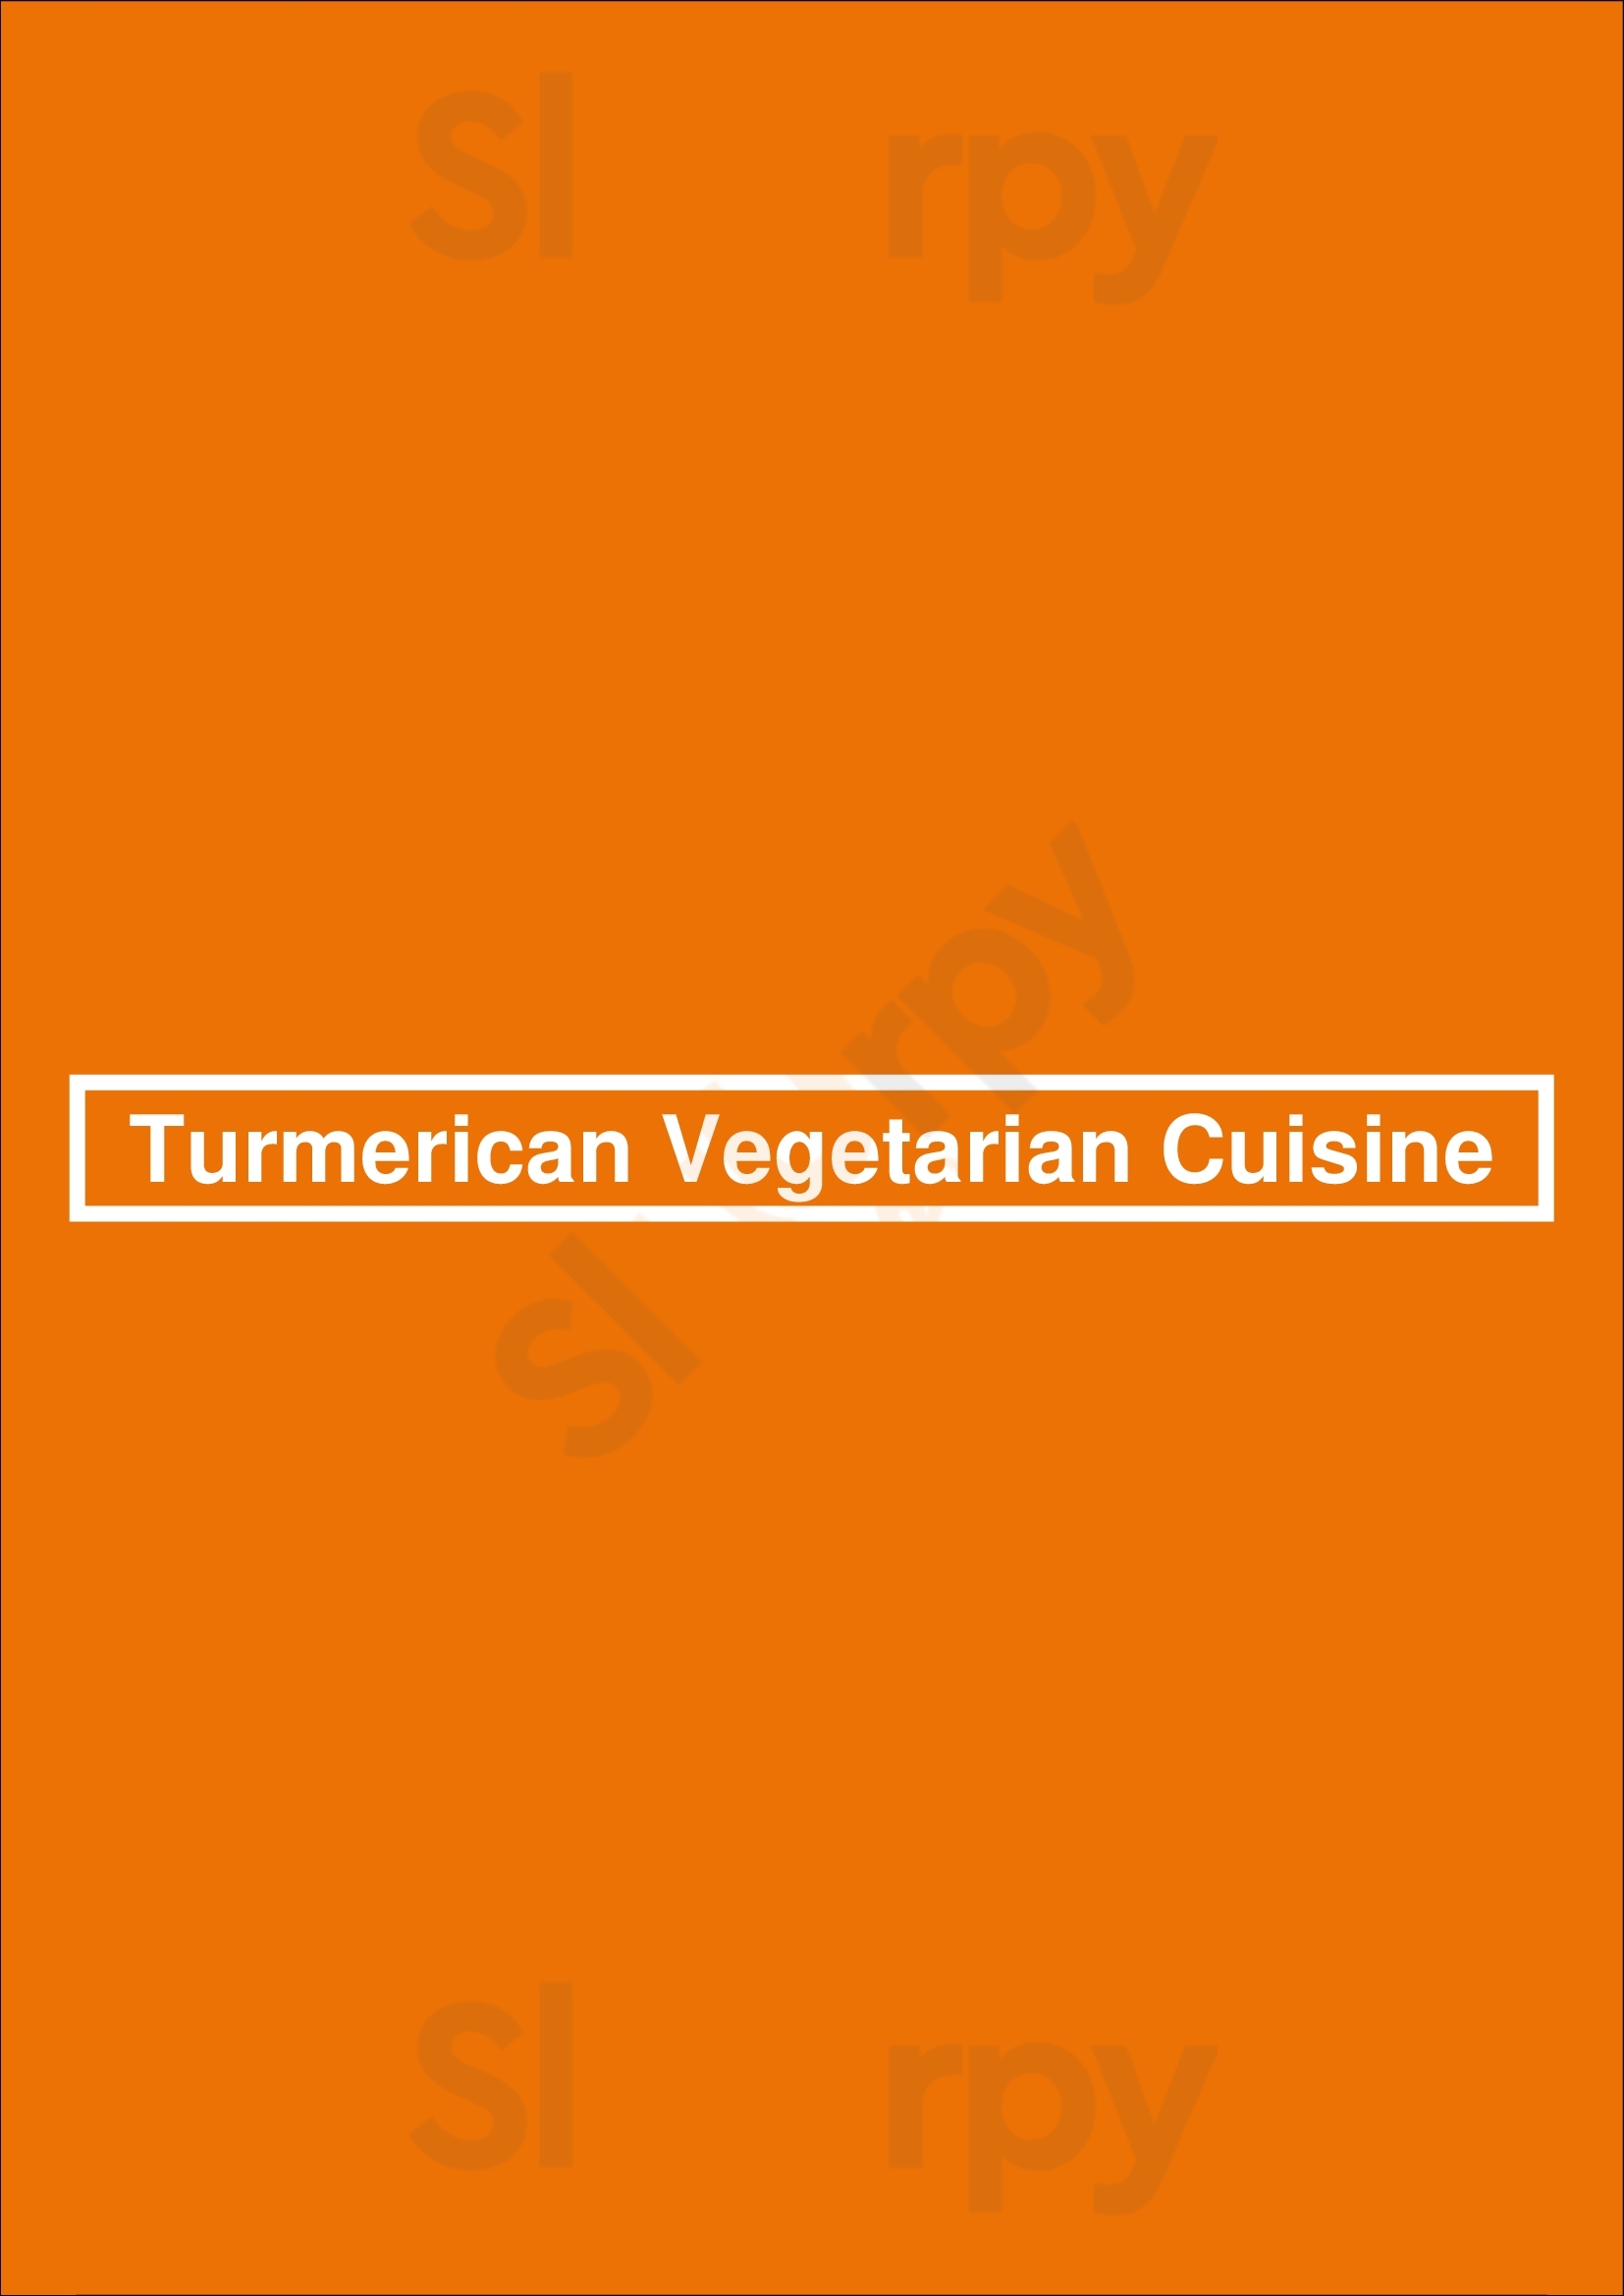 Turmerican Vegetarian Cuisine Novi Menu - 1